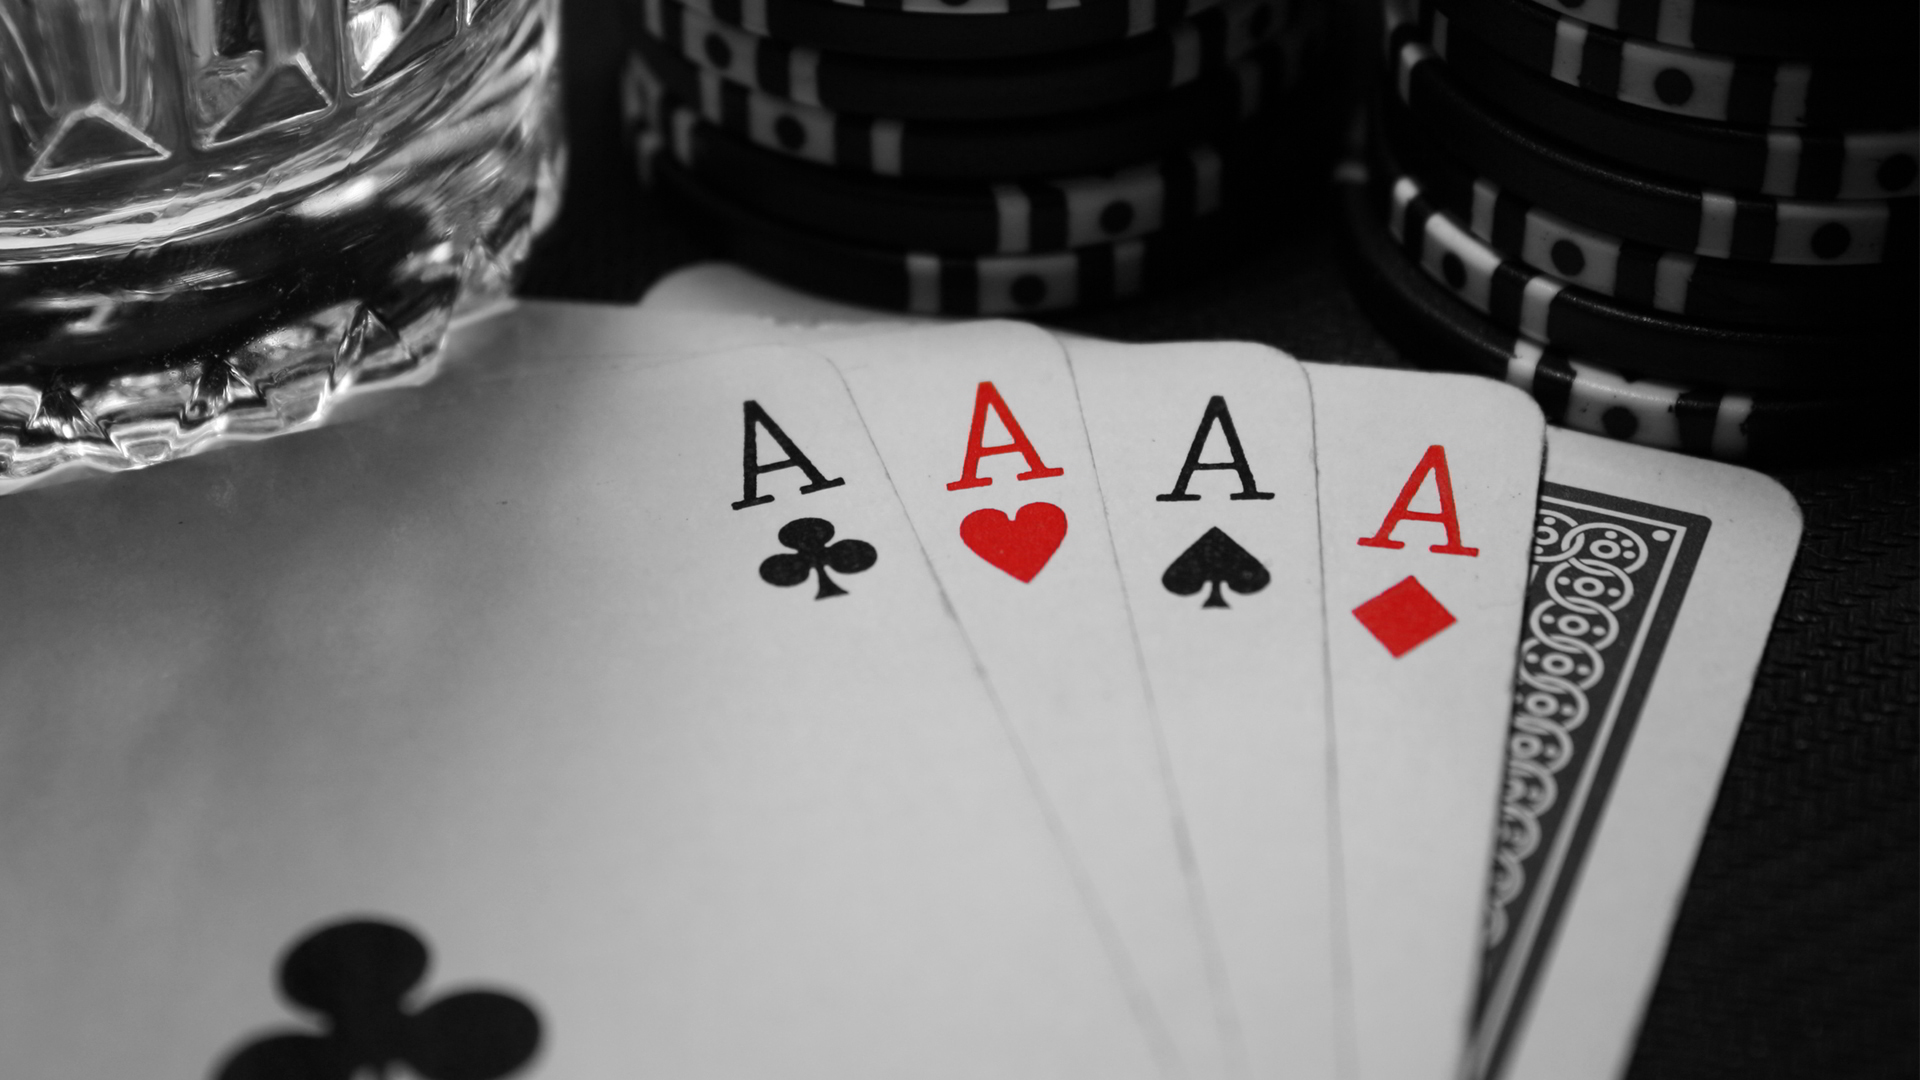 Four Aces Poker